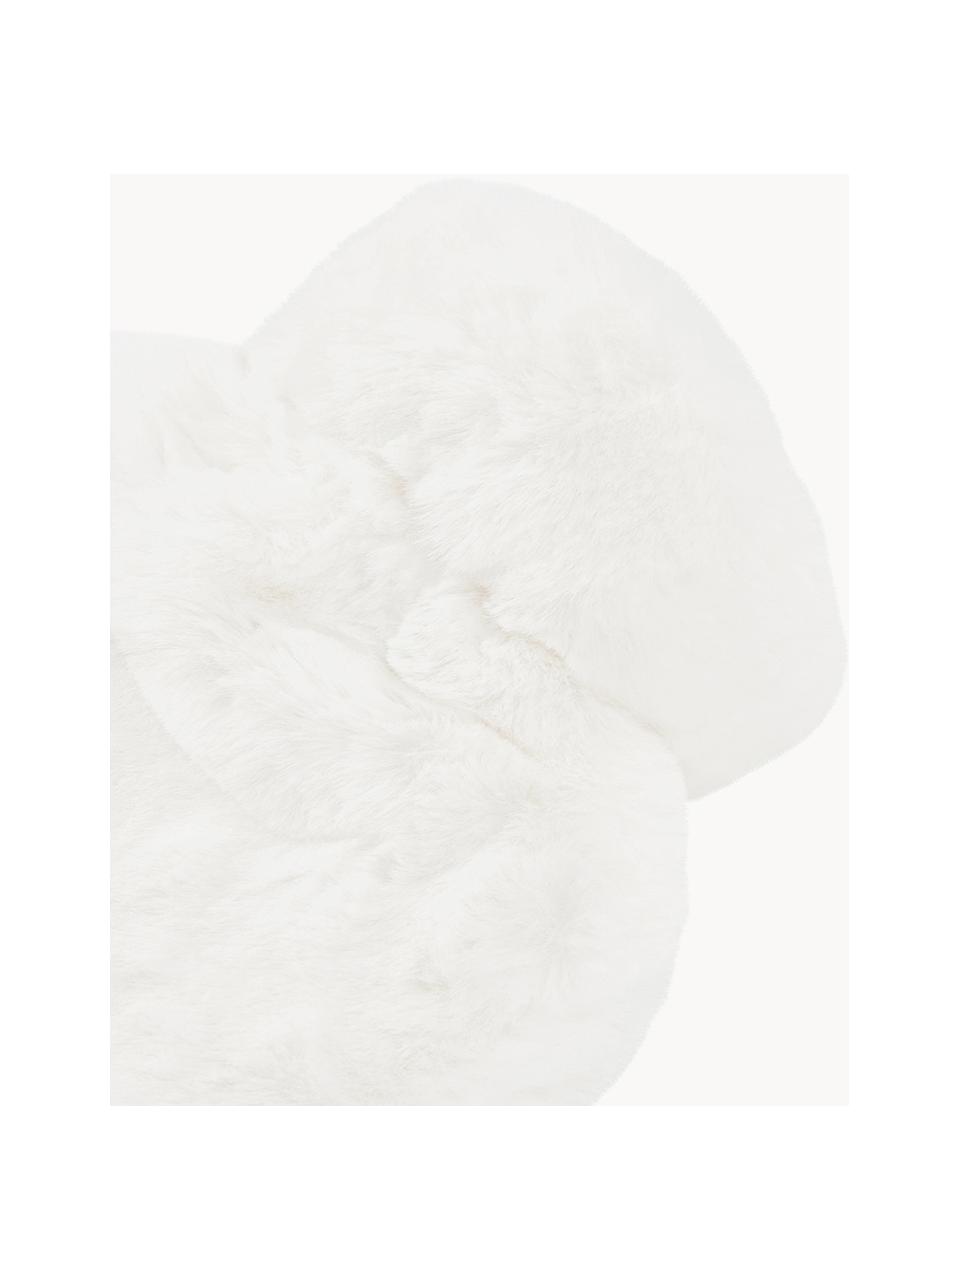 Warmwaterkruik van imitatievacht Mette, Bekleding: 100% polyester, GRS-gecer, Wit, B 20 x L 32 cm